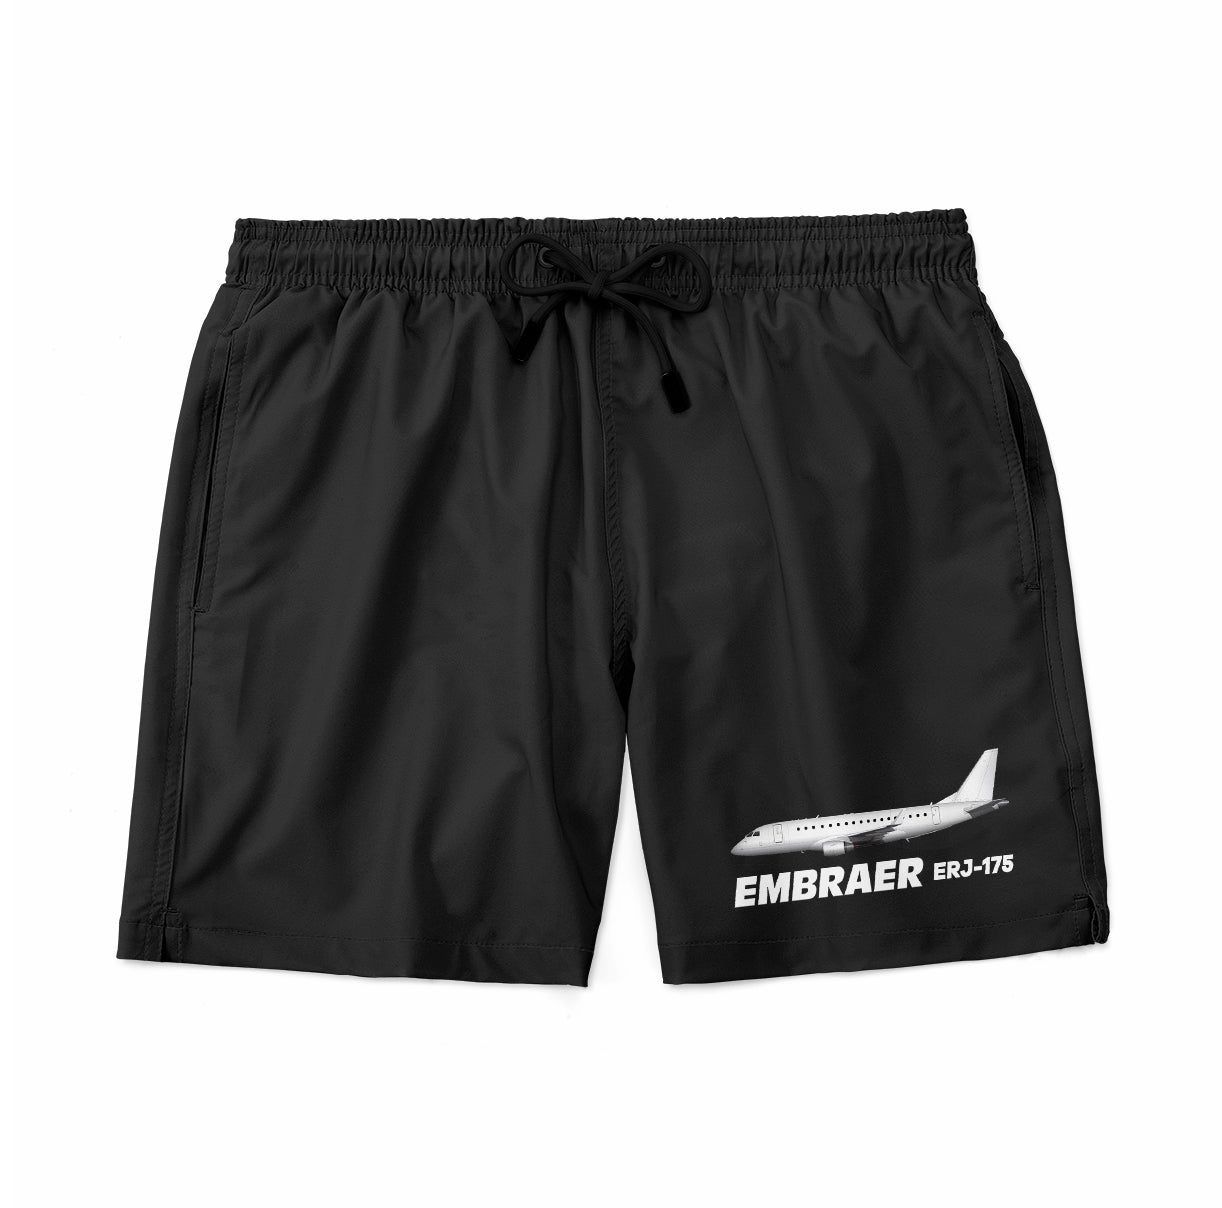 The Embraer ERJ-175 Designed Swim Trunks & Shorts